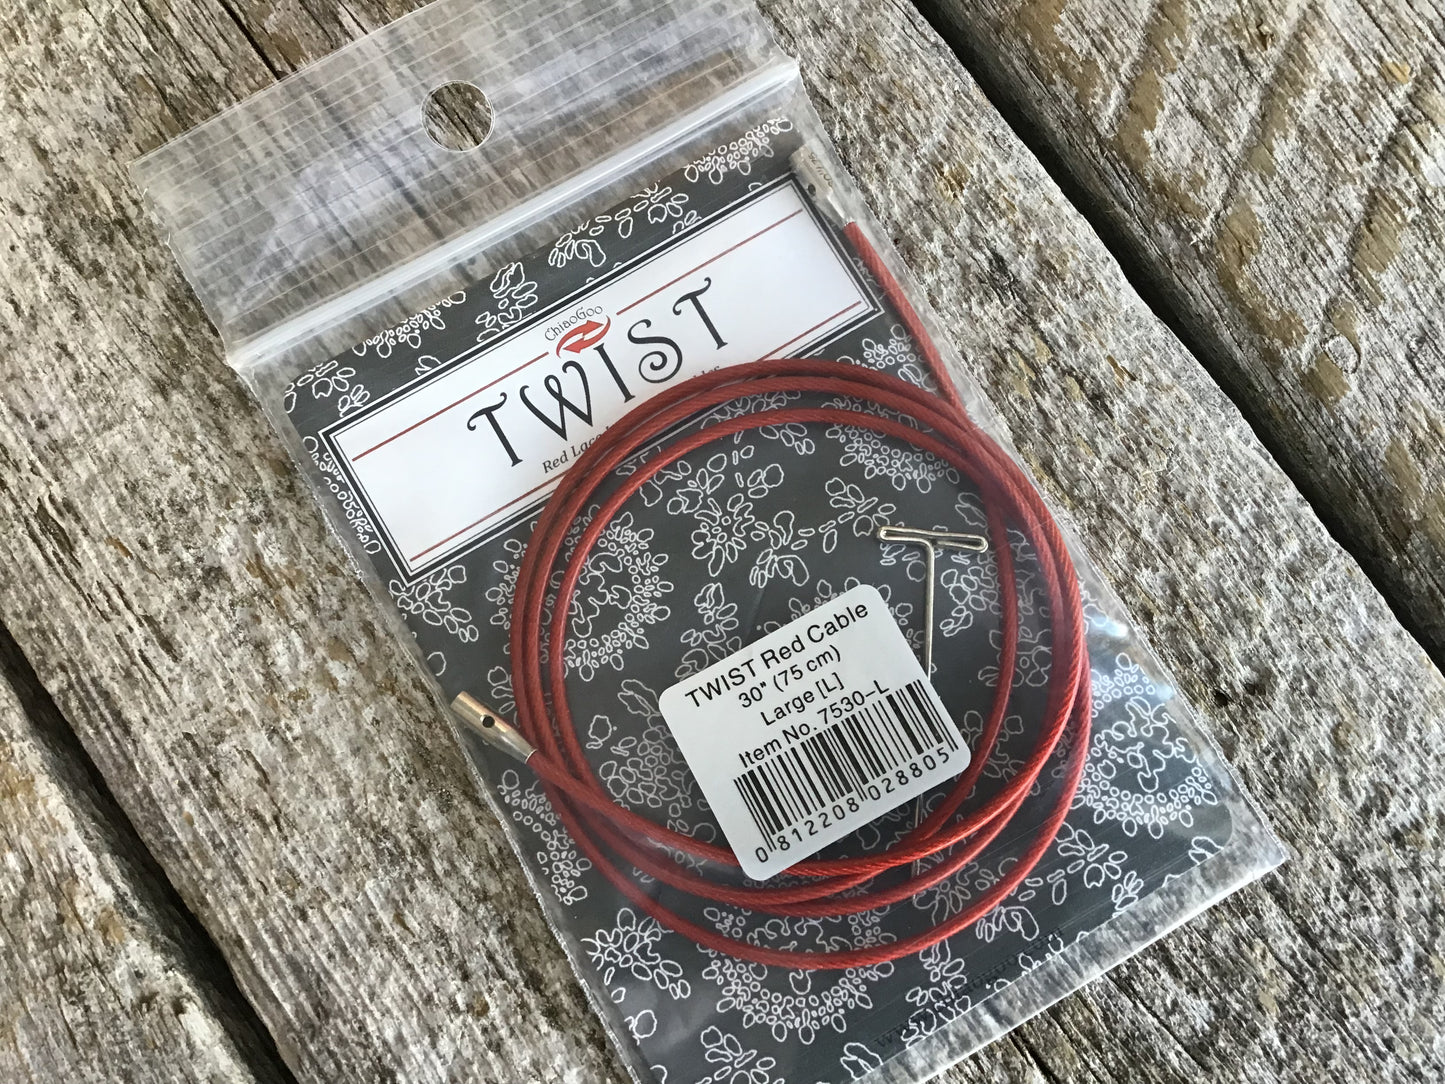 Câbles pour aiguilles circulaires interchangeables CHIAOGOO TWIST Red lace circular needles cables